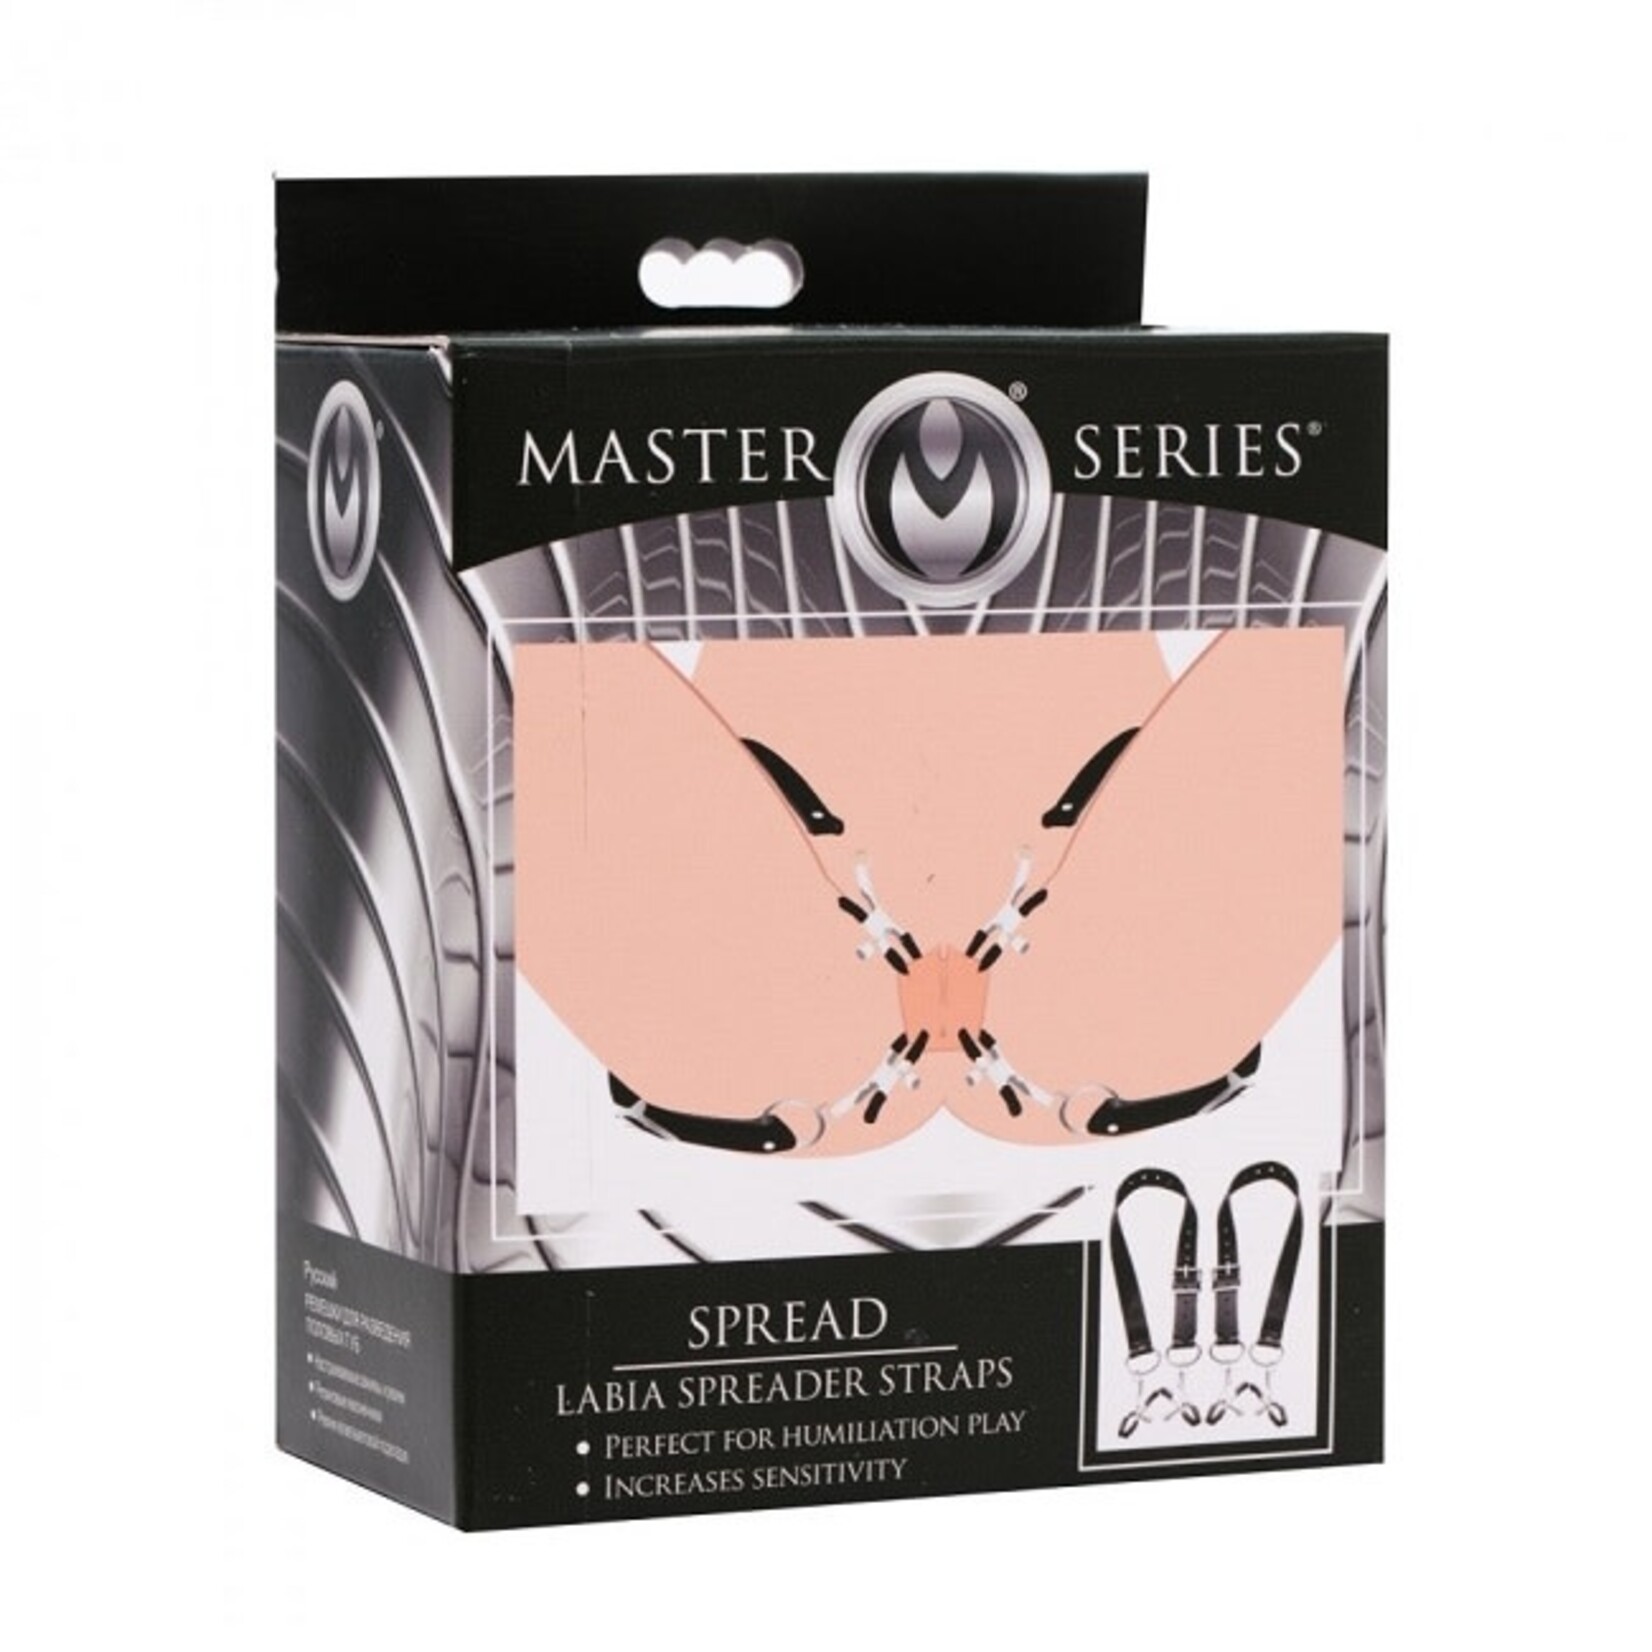 Master Series Master Series Spread Labia Spreader Straps